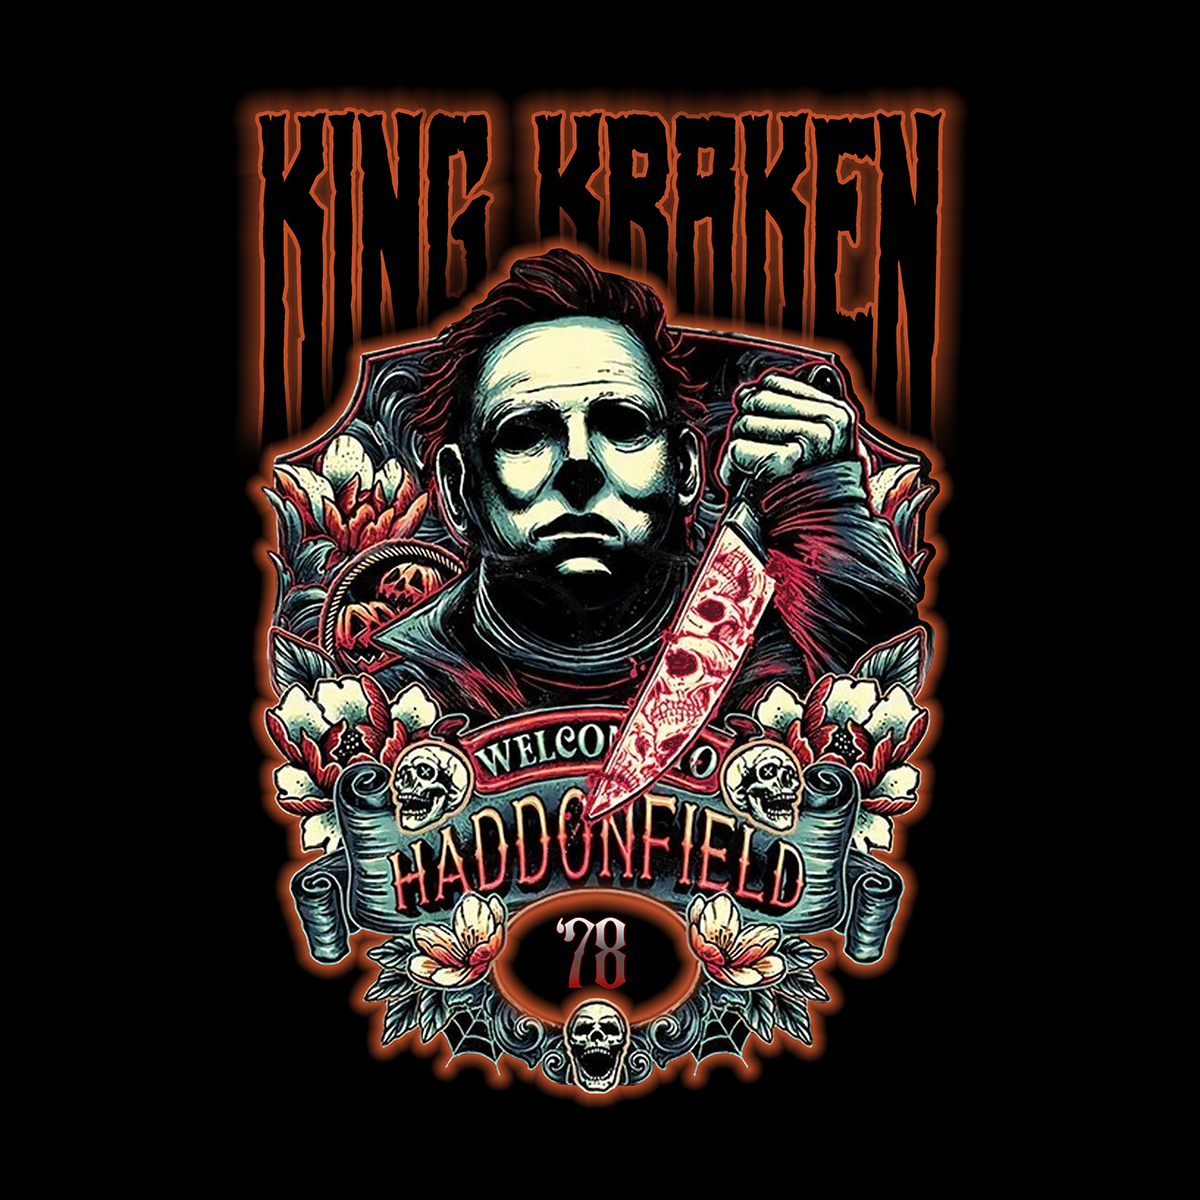 King Kraken - Haddonfield 78 artwork